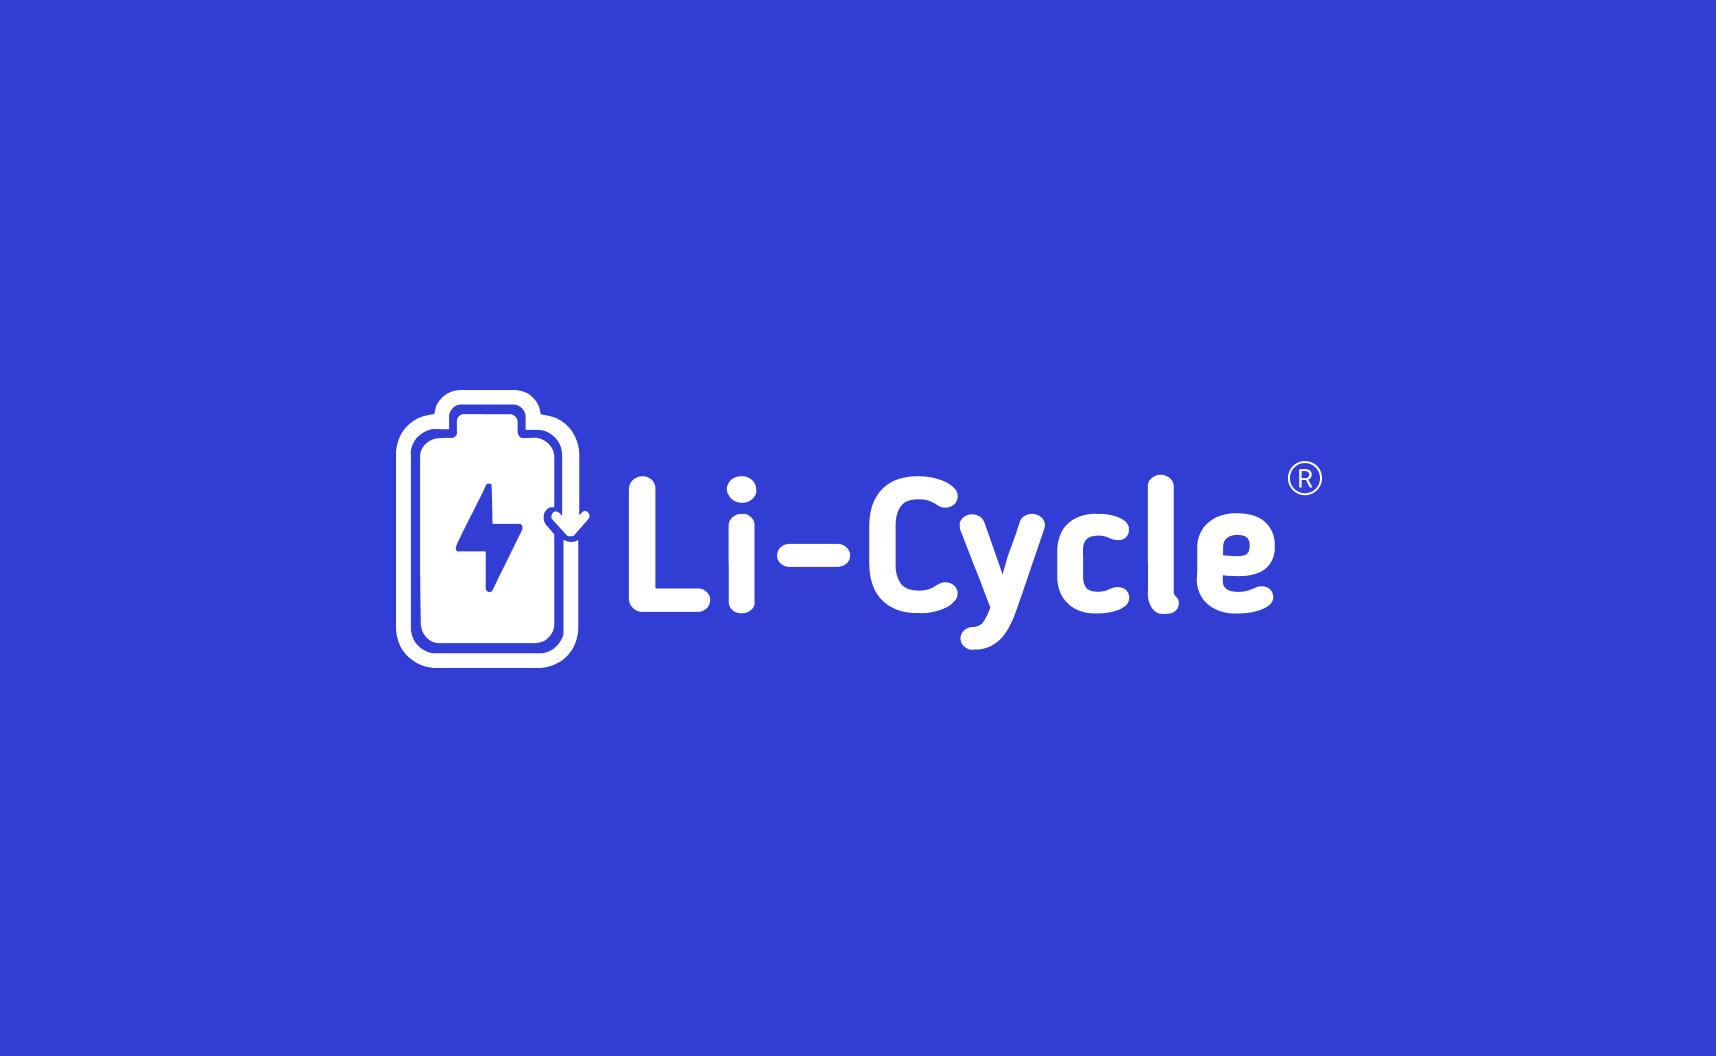 White Li-Cycle logo on blue background